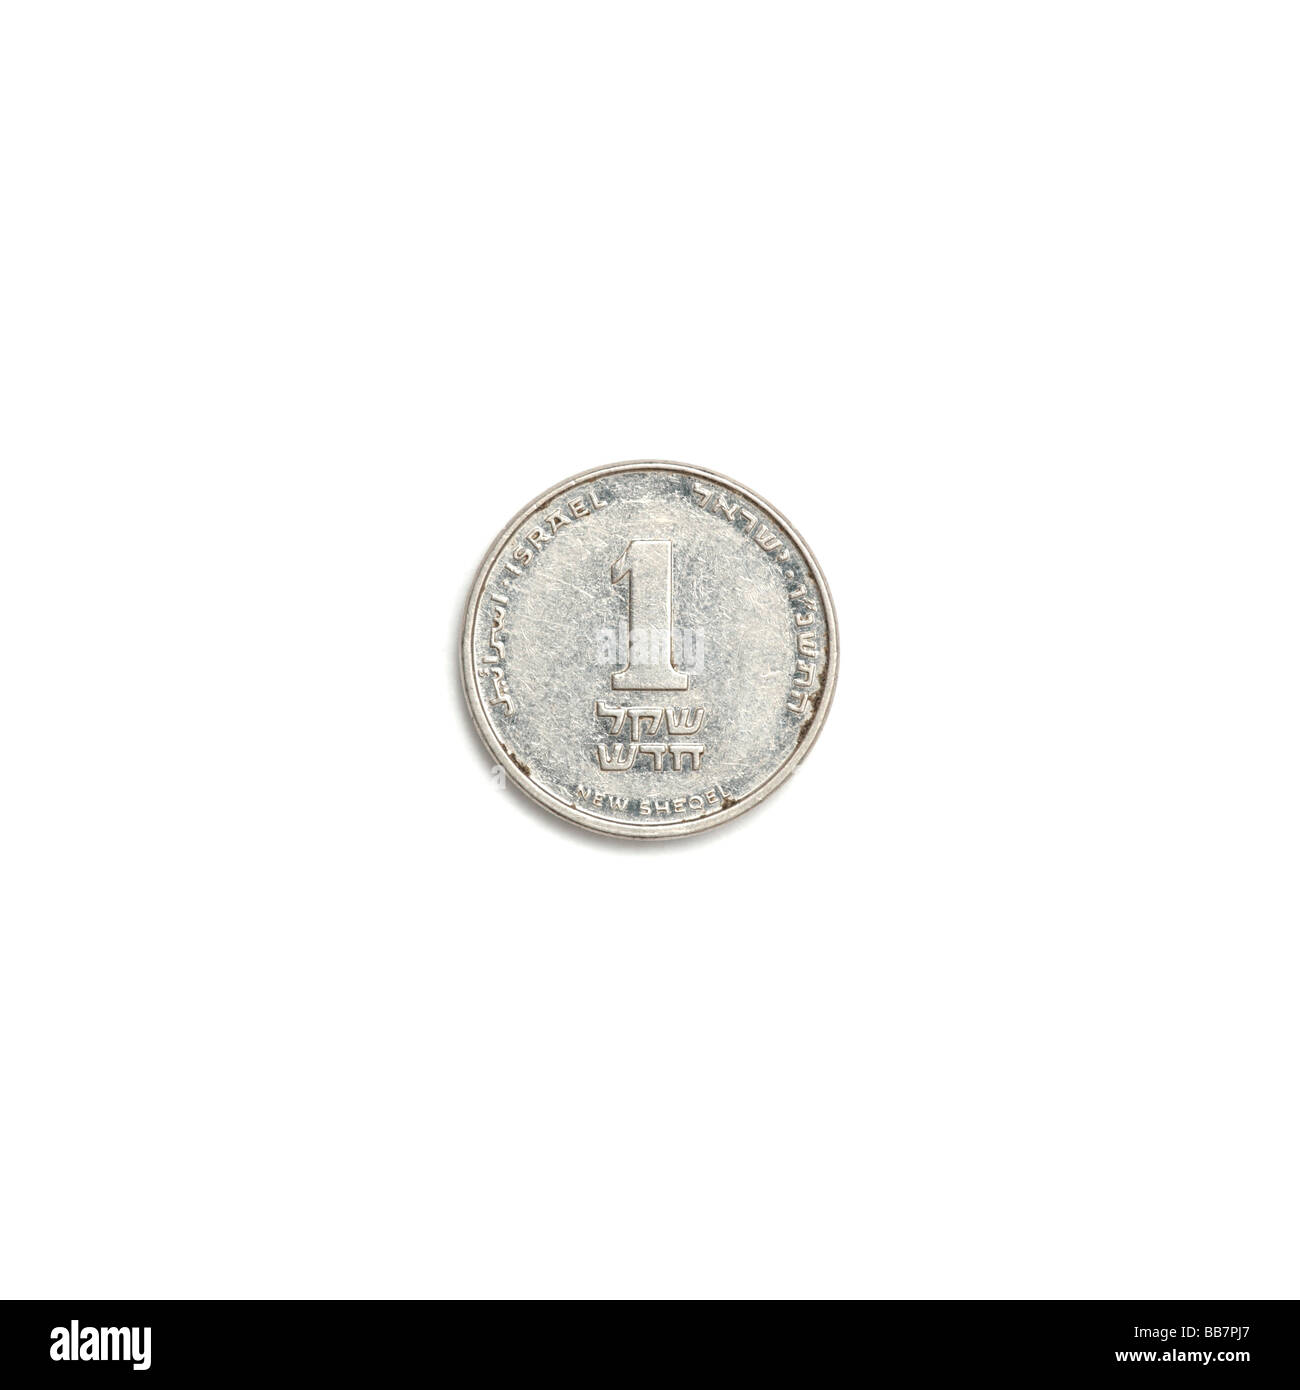 "Moneta israeliana - Nuovo sheqel' Foto Stock